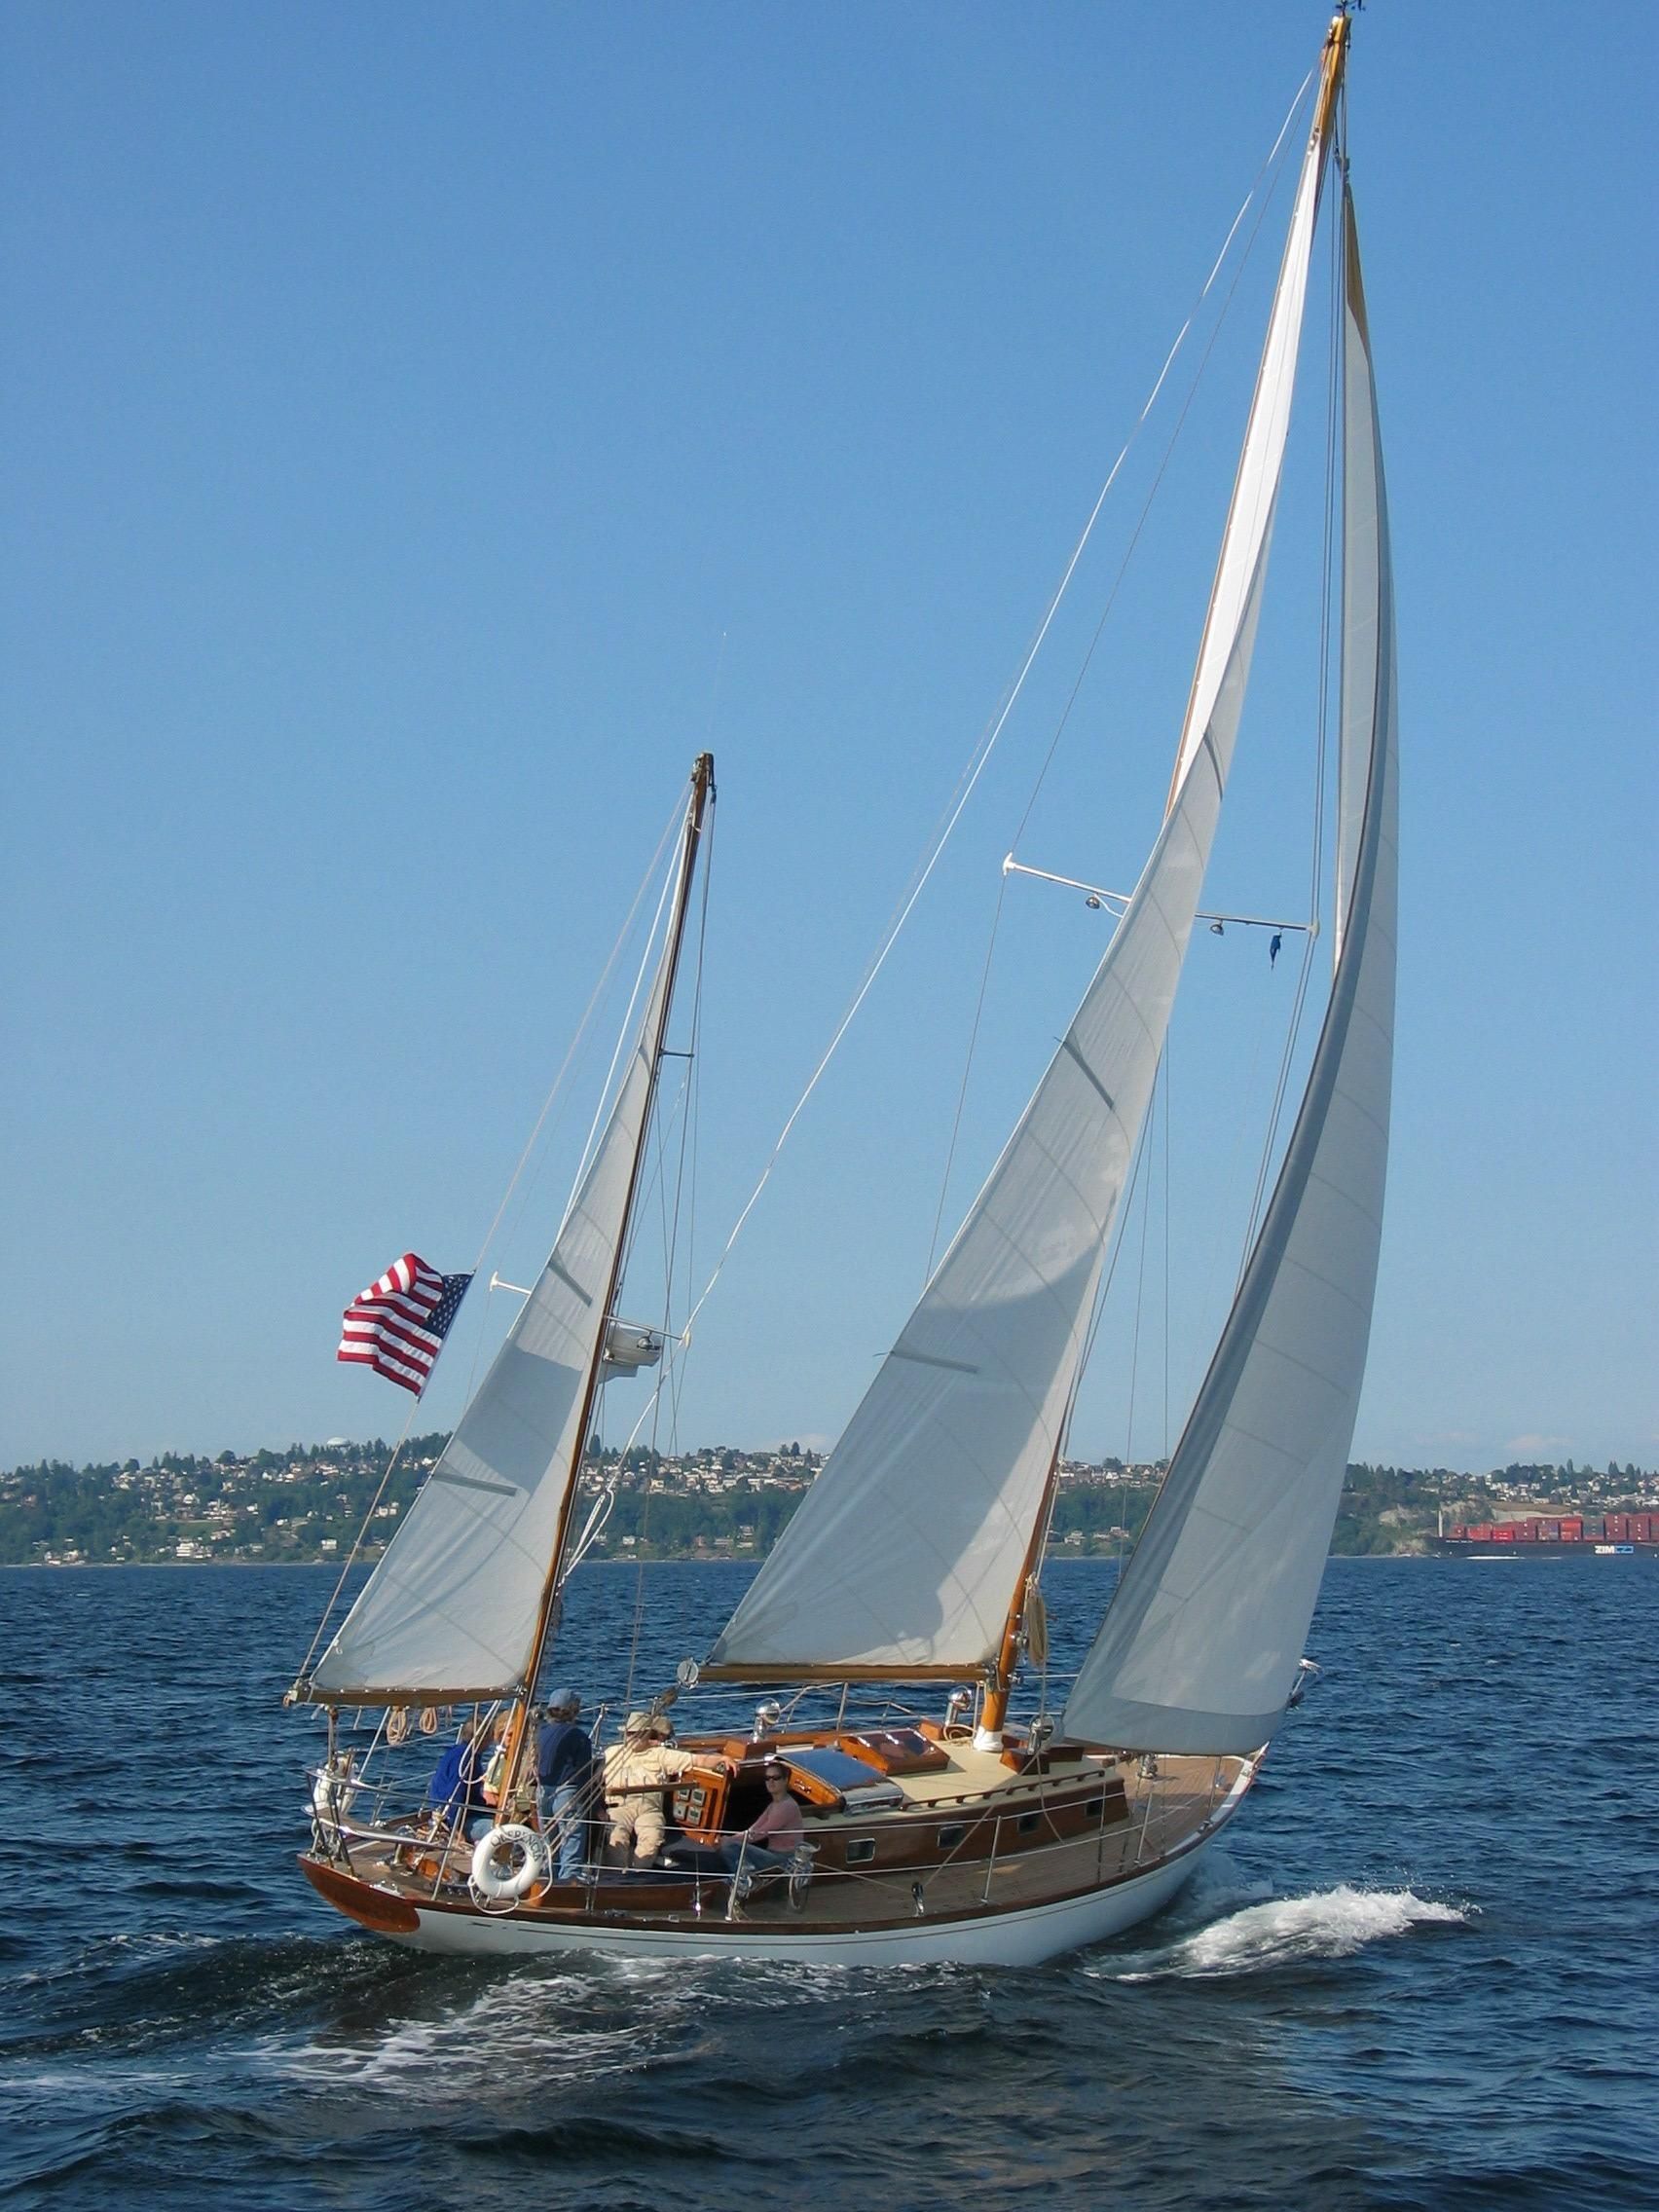 sparkman & stephens sailboats for sale